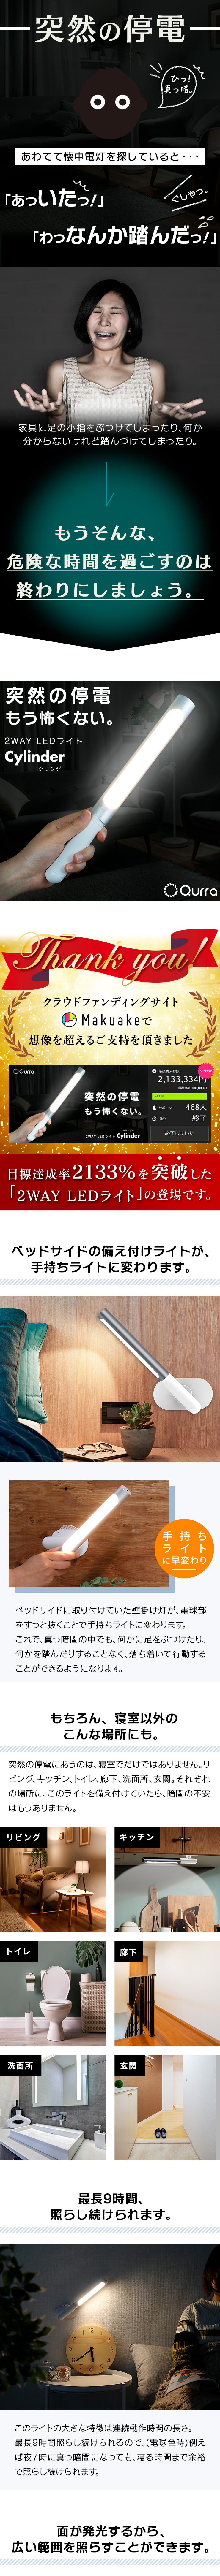 LEDライト 充電式 LED ベッドサイドランプ 読書灯 コードレス LEDバーライト 壁掛けライト LED懐中電灯 電球色 間接照明